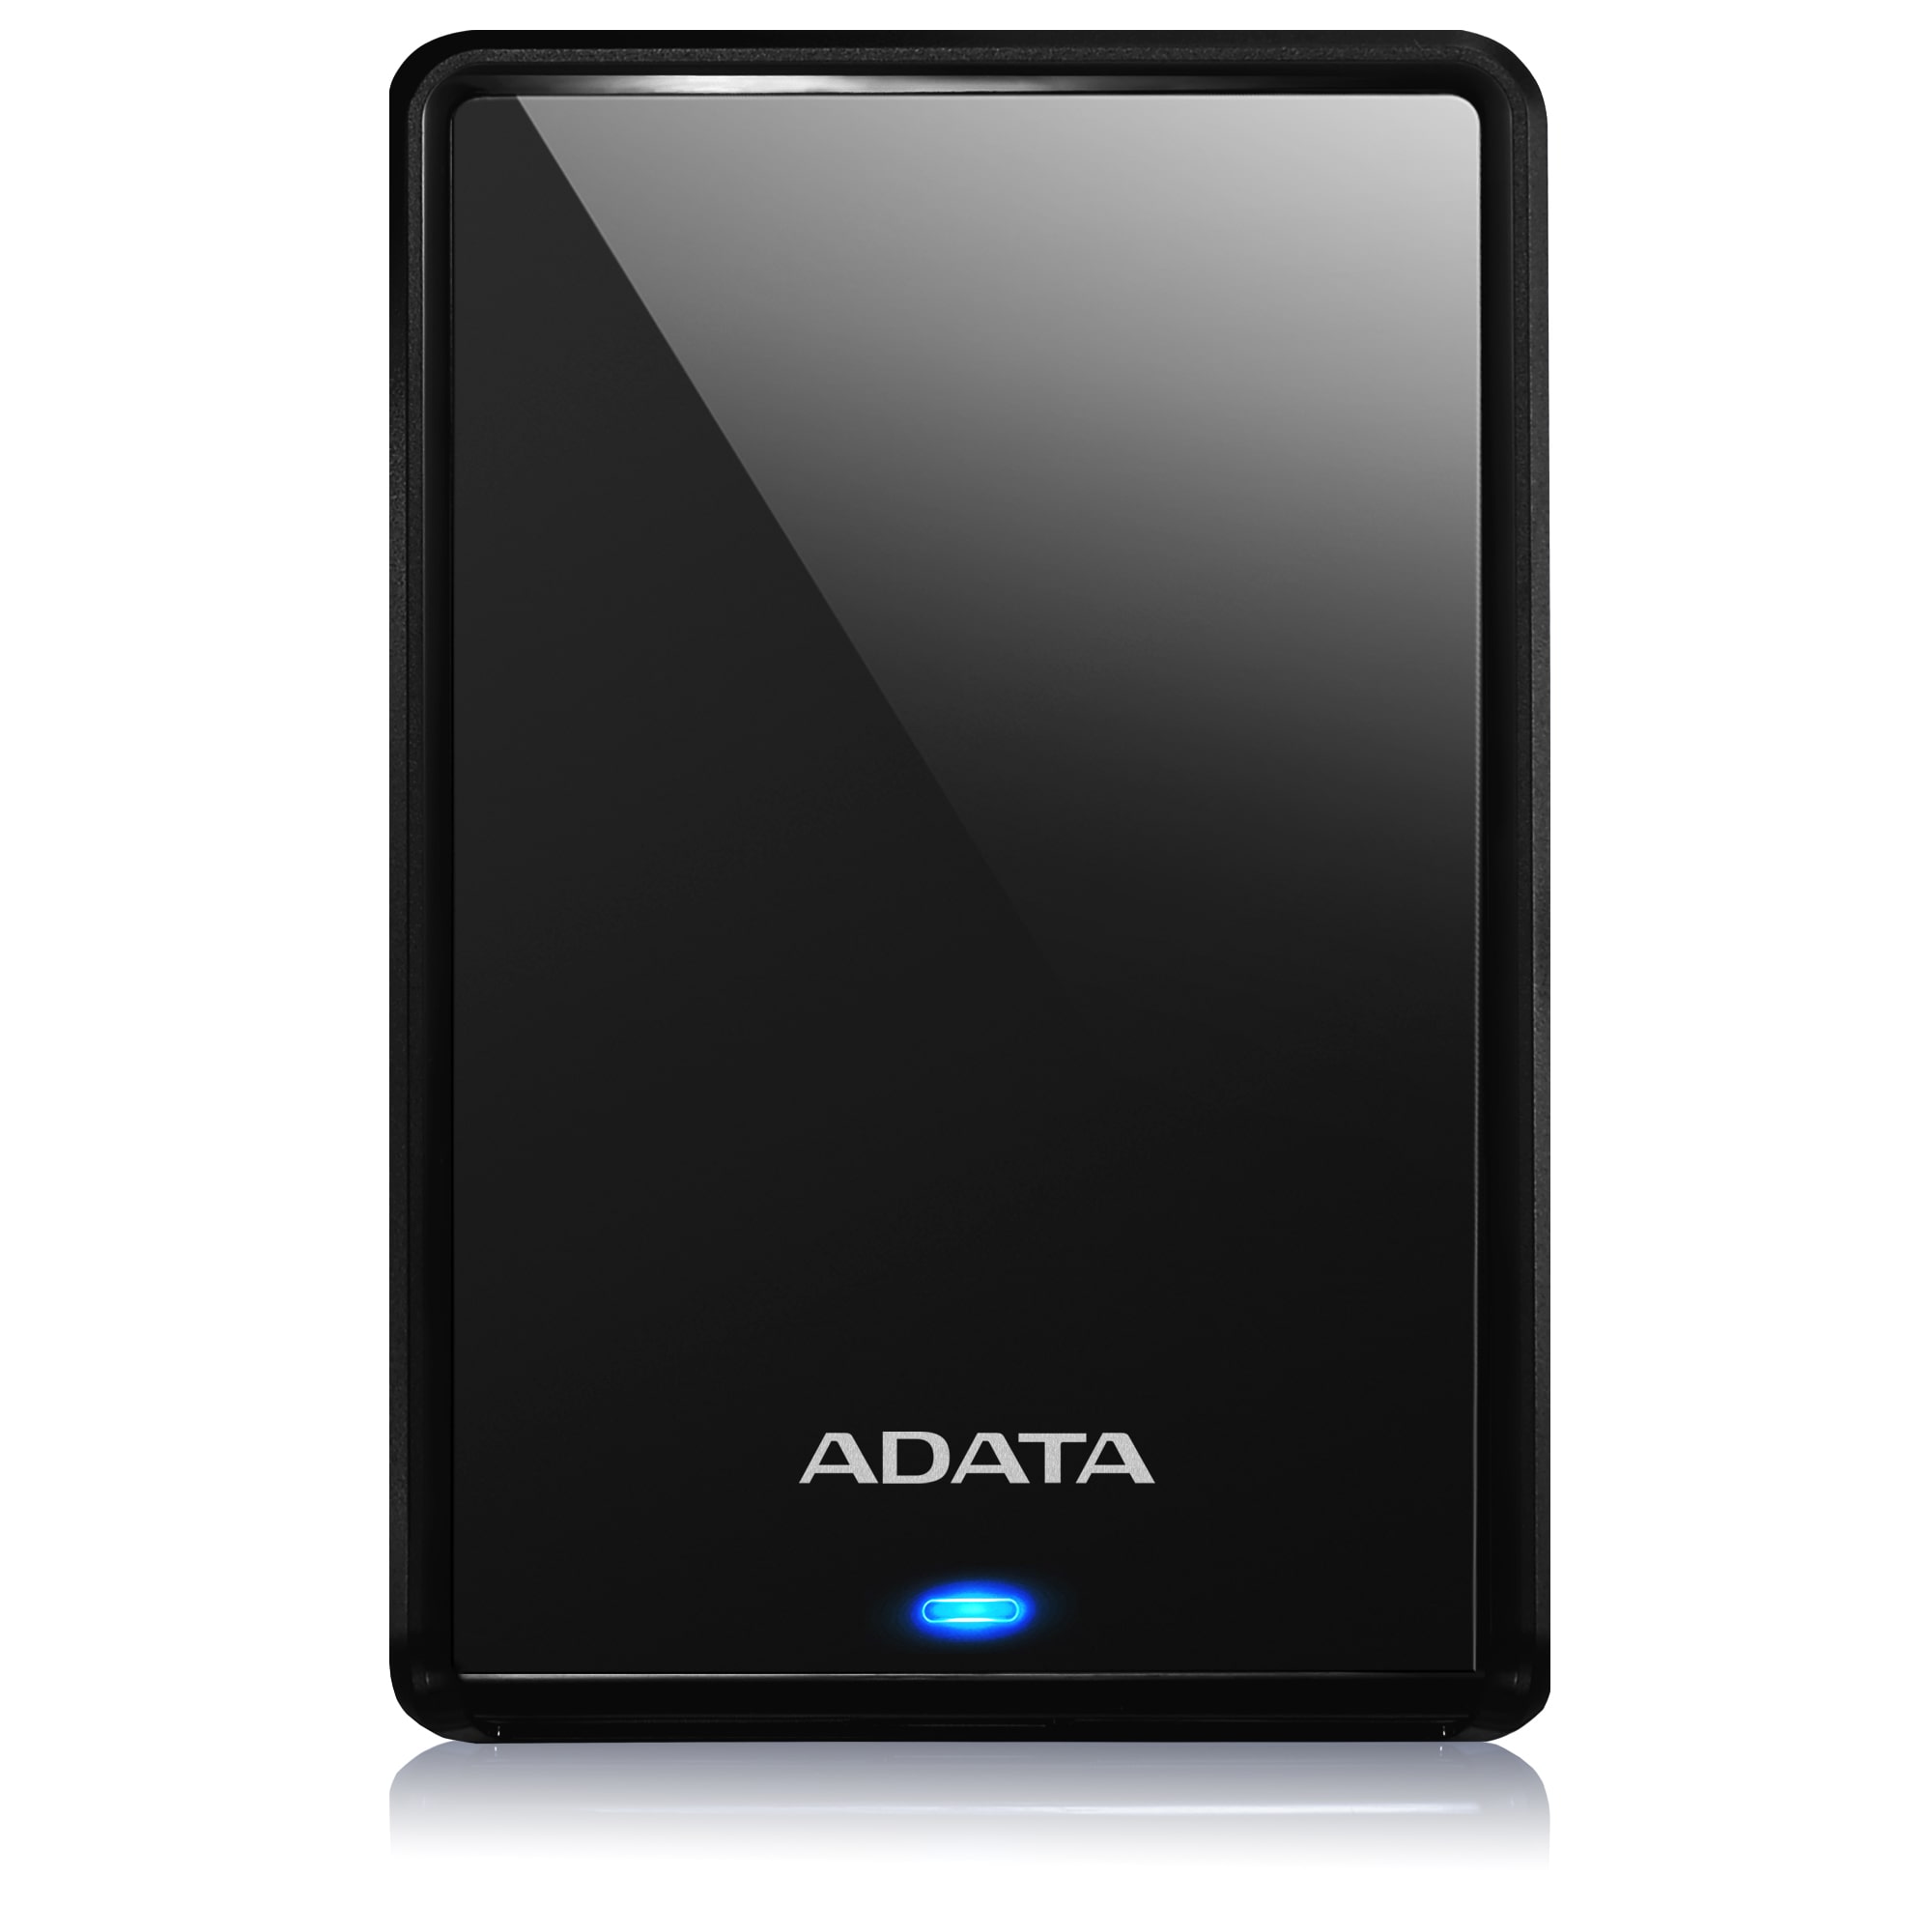 Přenosný pevný disk ADATA HV620S 4TB černý black